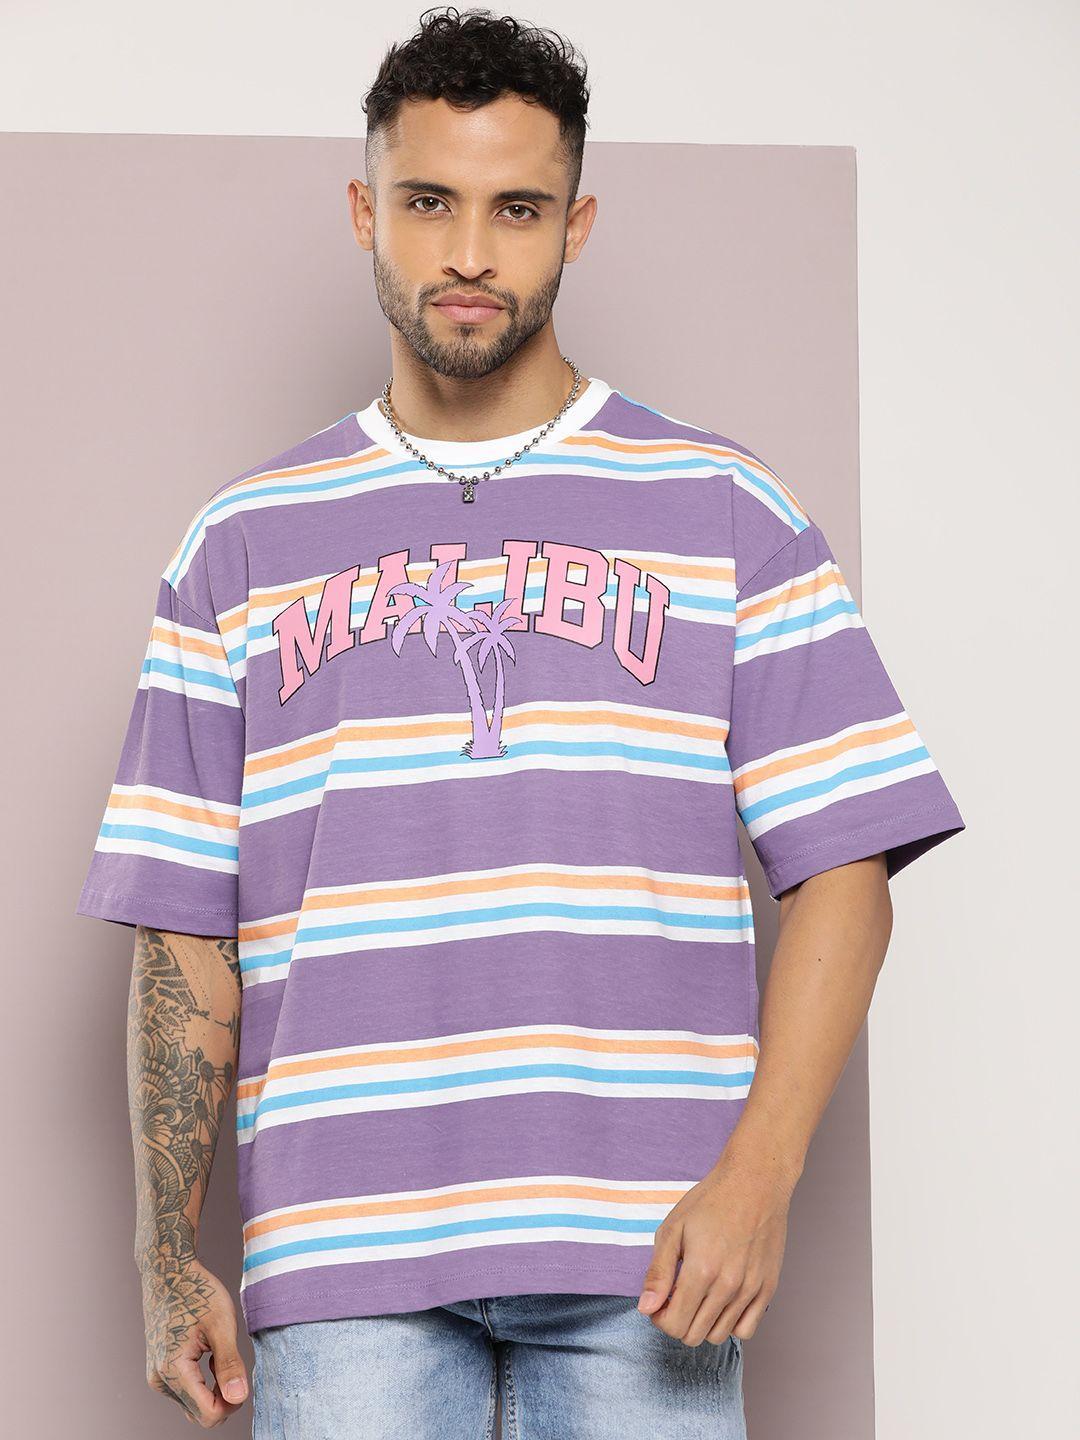 kook n keech striped oversized pure cotton t-shirt